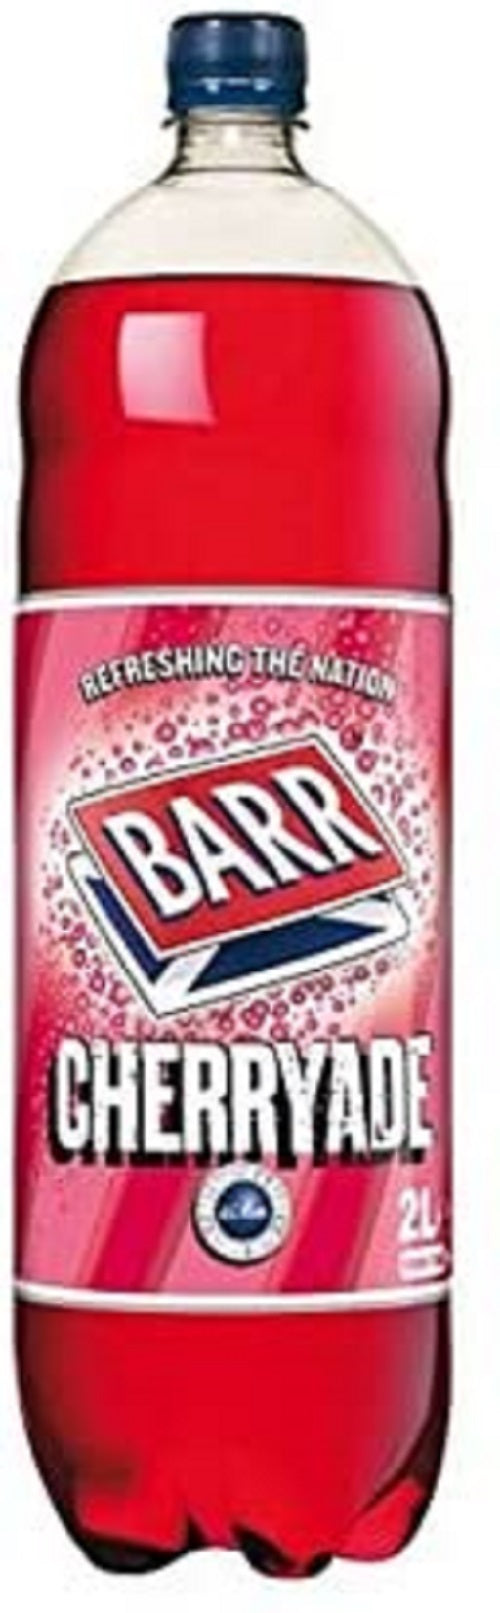 Barr Cherryade Fizzy Drink Soda Bottles - 2 Litre - Pack of 6